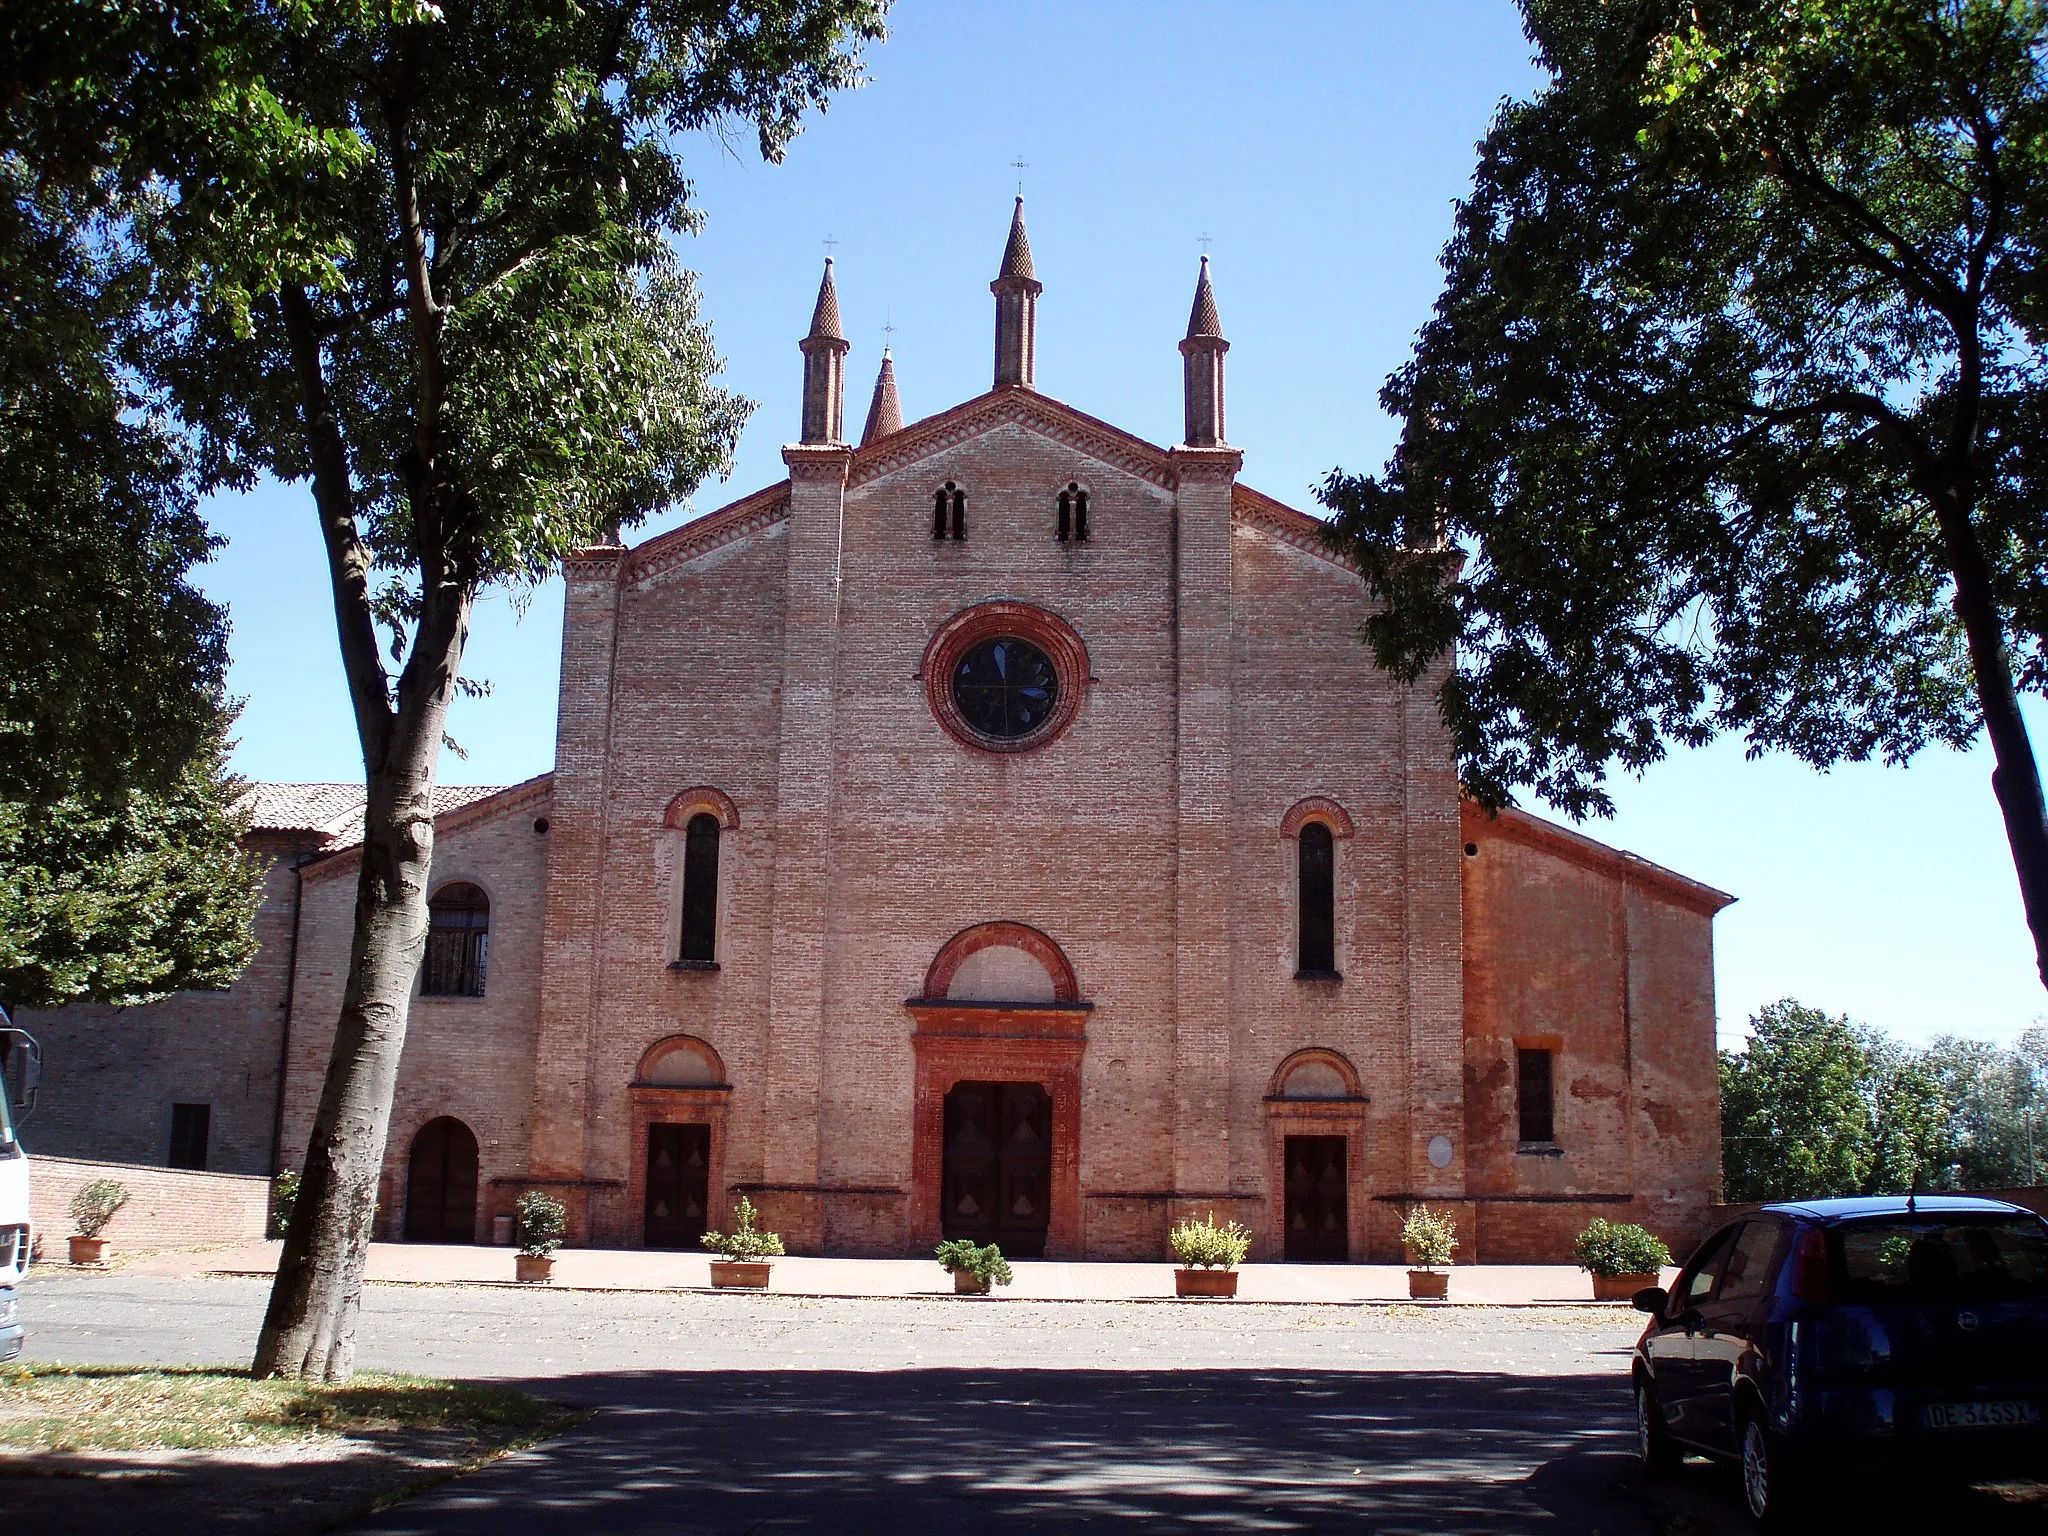 Photo showing: The church of Annunziata, Cortemaggiore, Piacenza province, Italy.